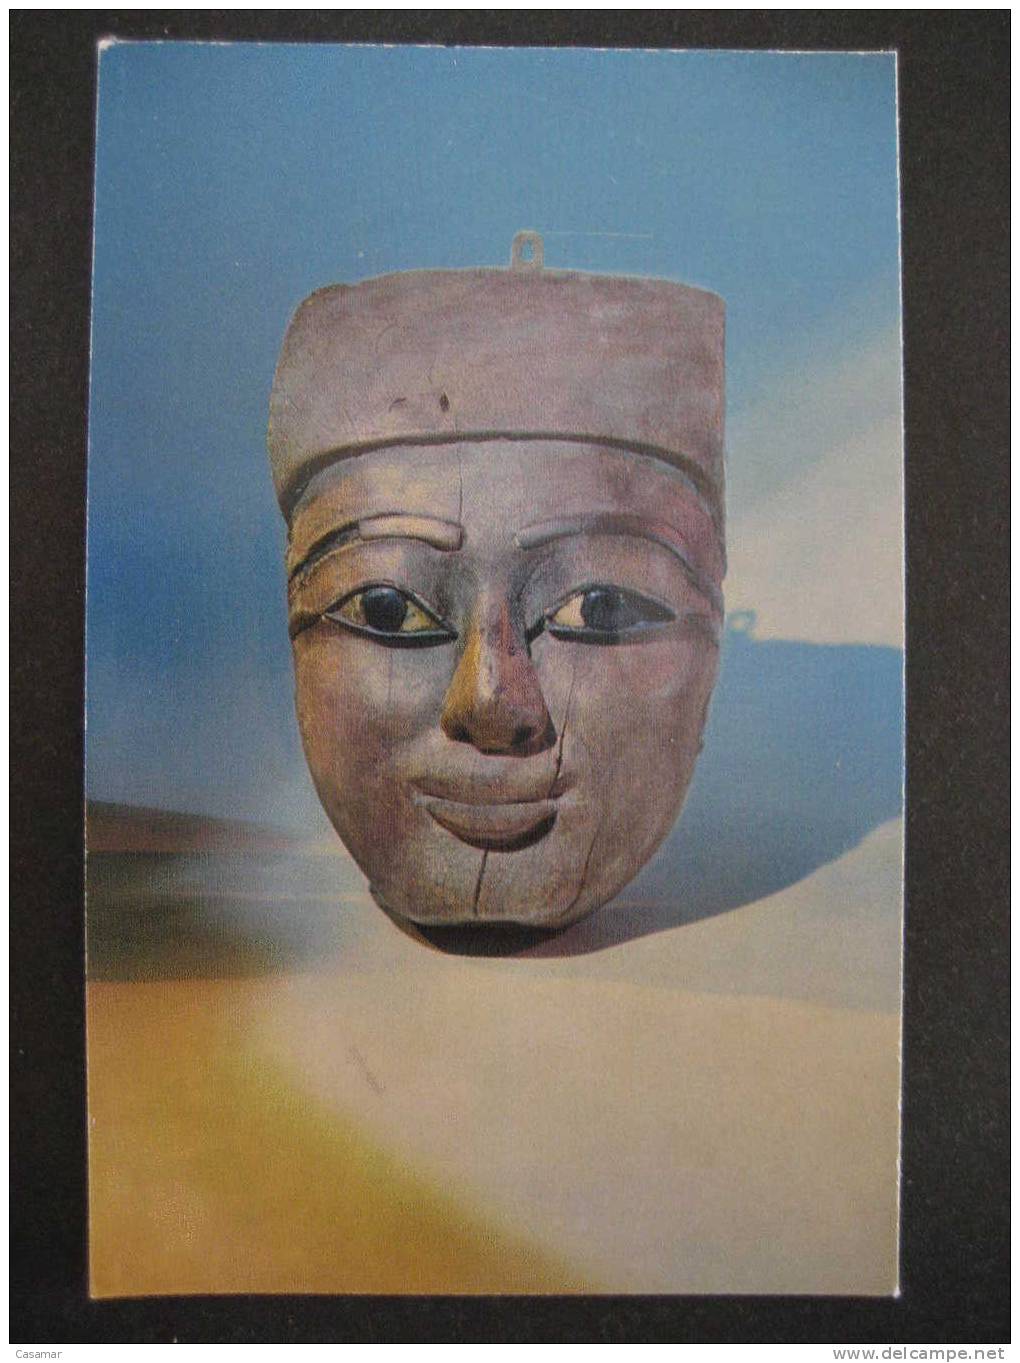 RUSSIA URSS Egypt Egypte Hermitage museum set 16 cards  archeology archeologie prehistory prehistoire art arqueologia